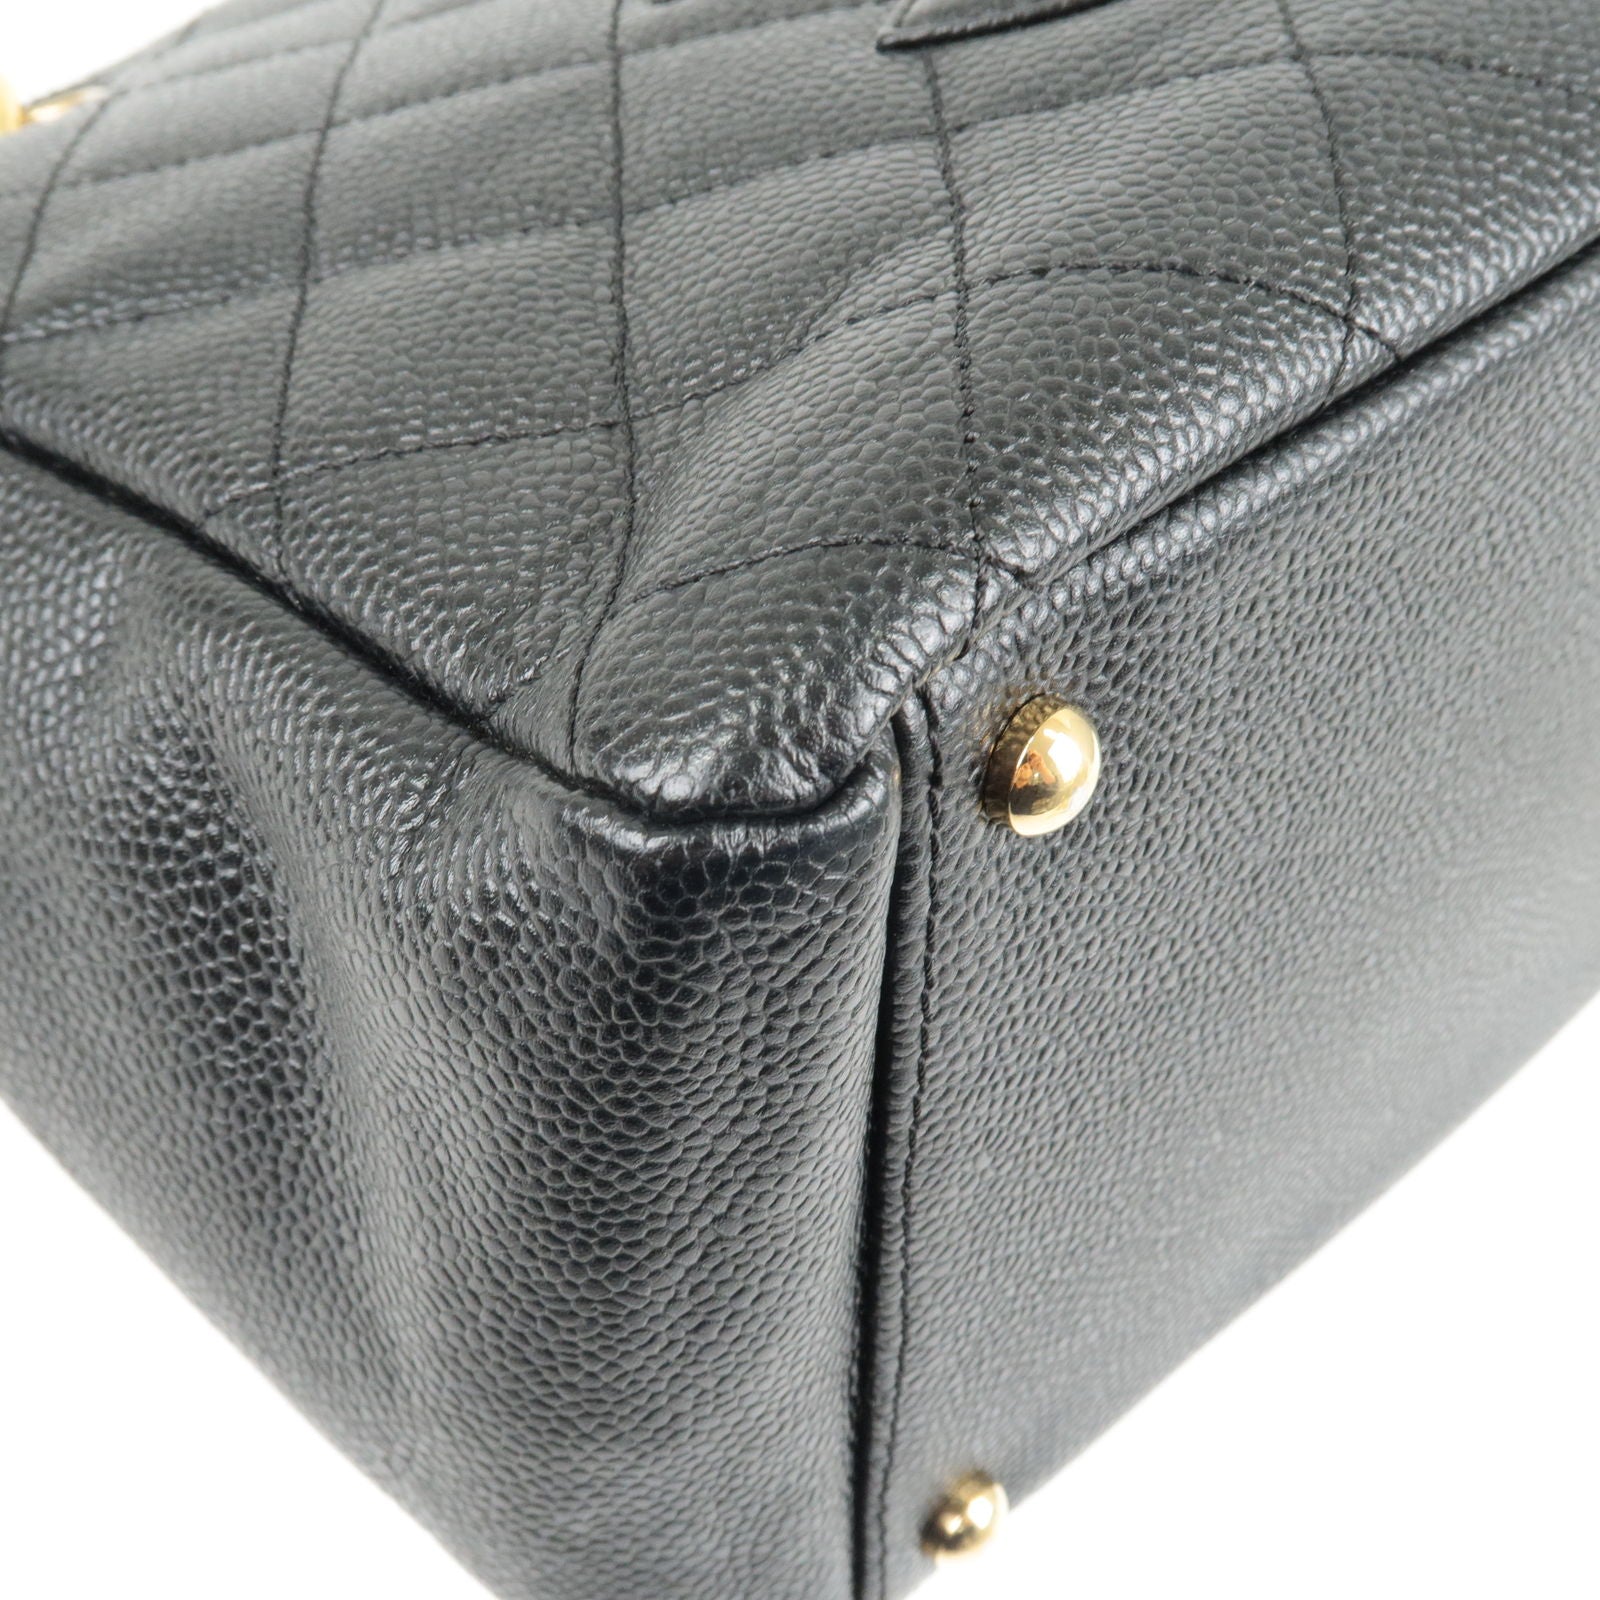 CHANEL Diana Matelasse Chain Shoulder Bag Caviar Skin Black